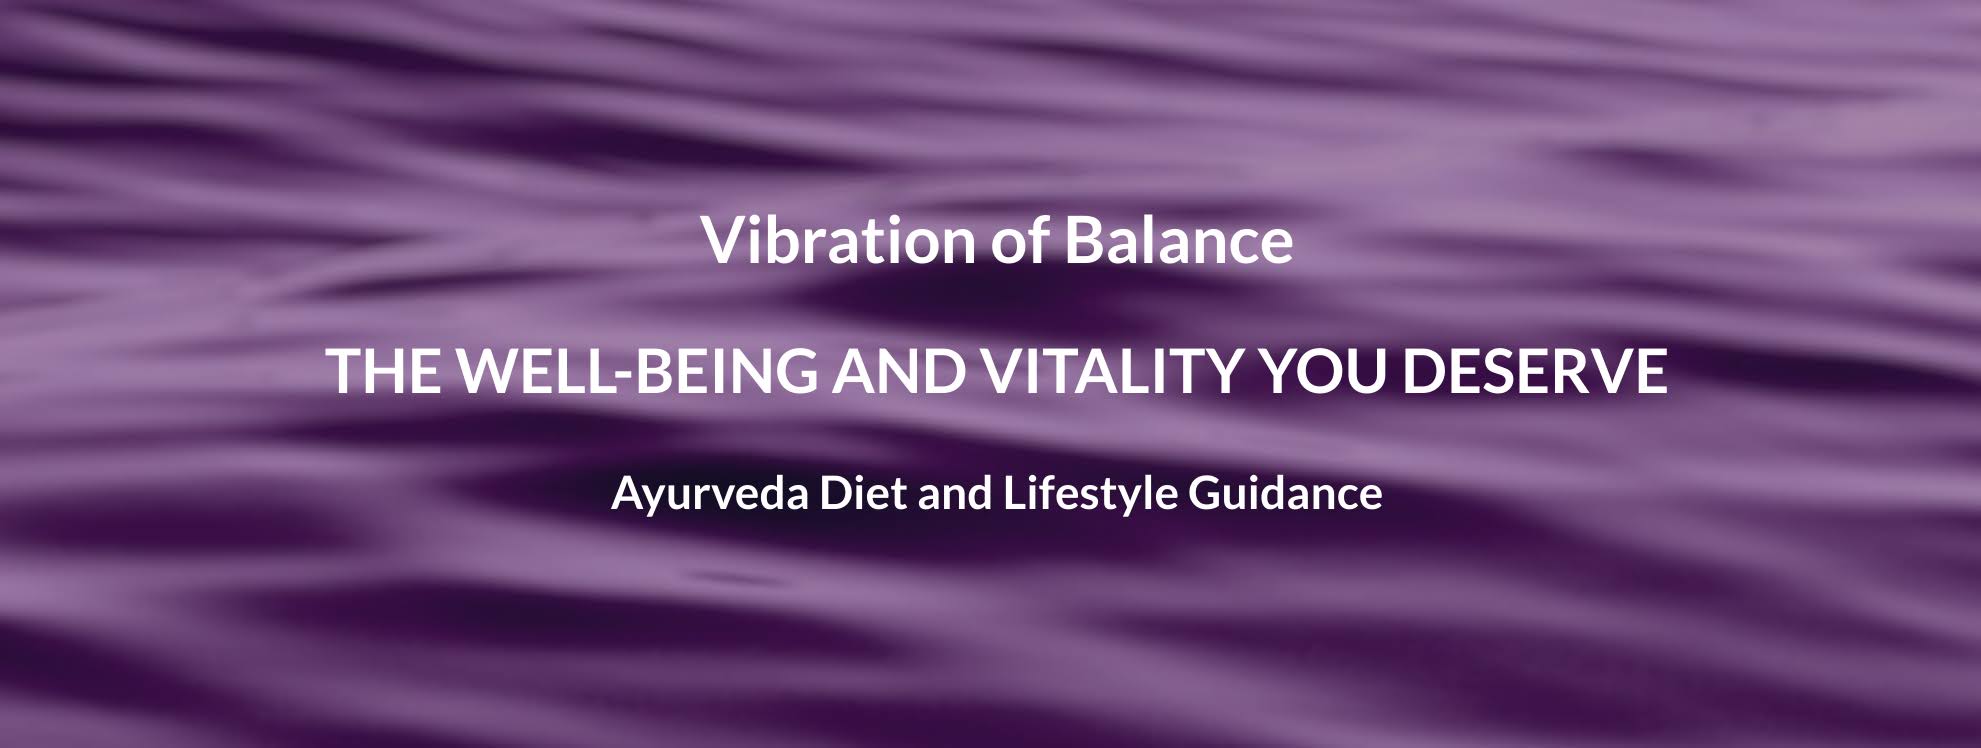 Vibration of Balance